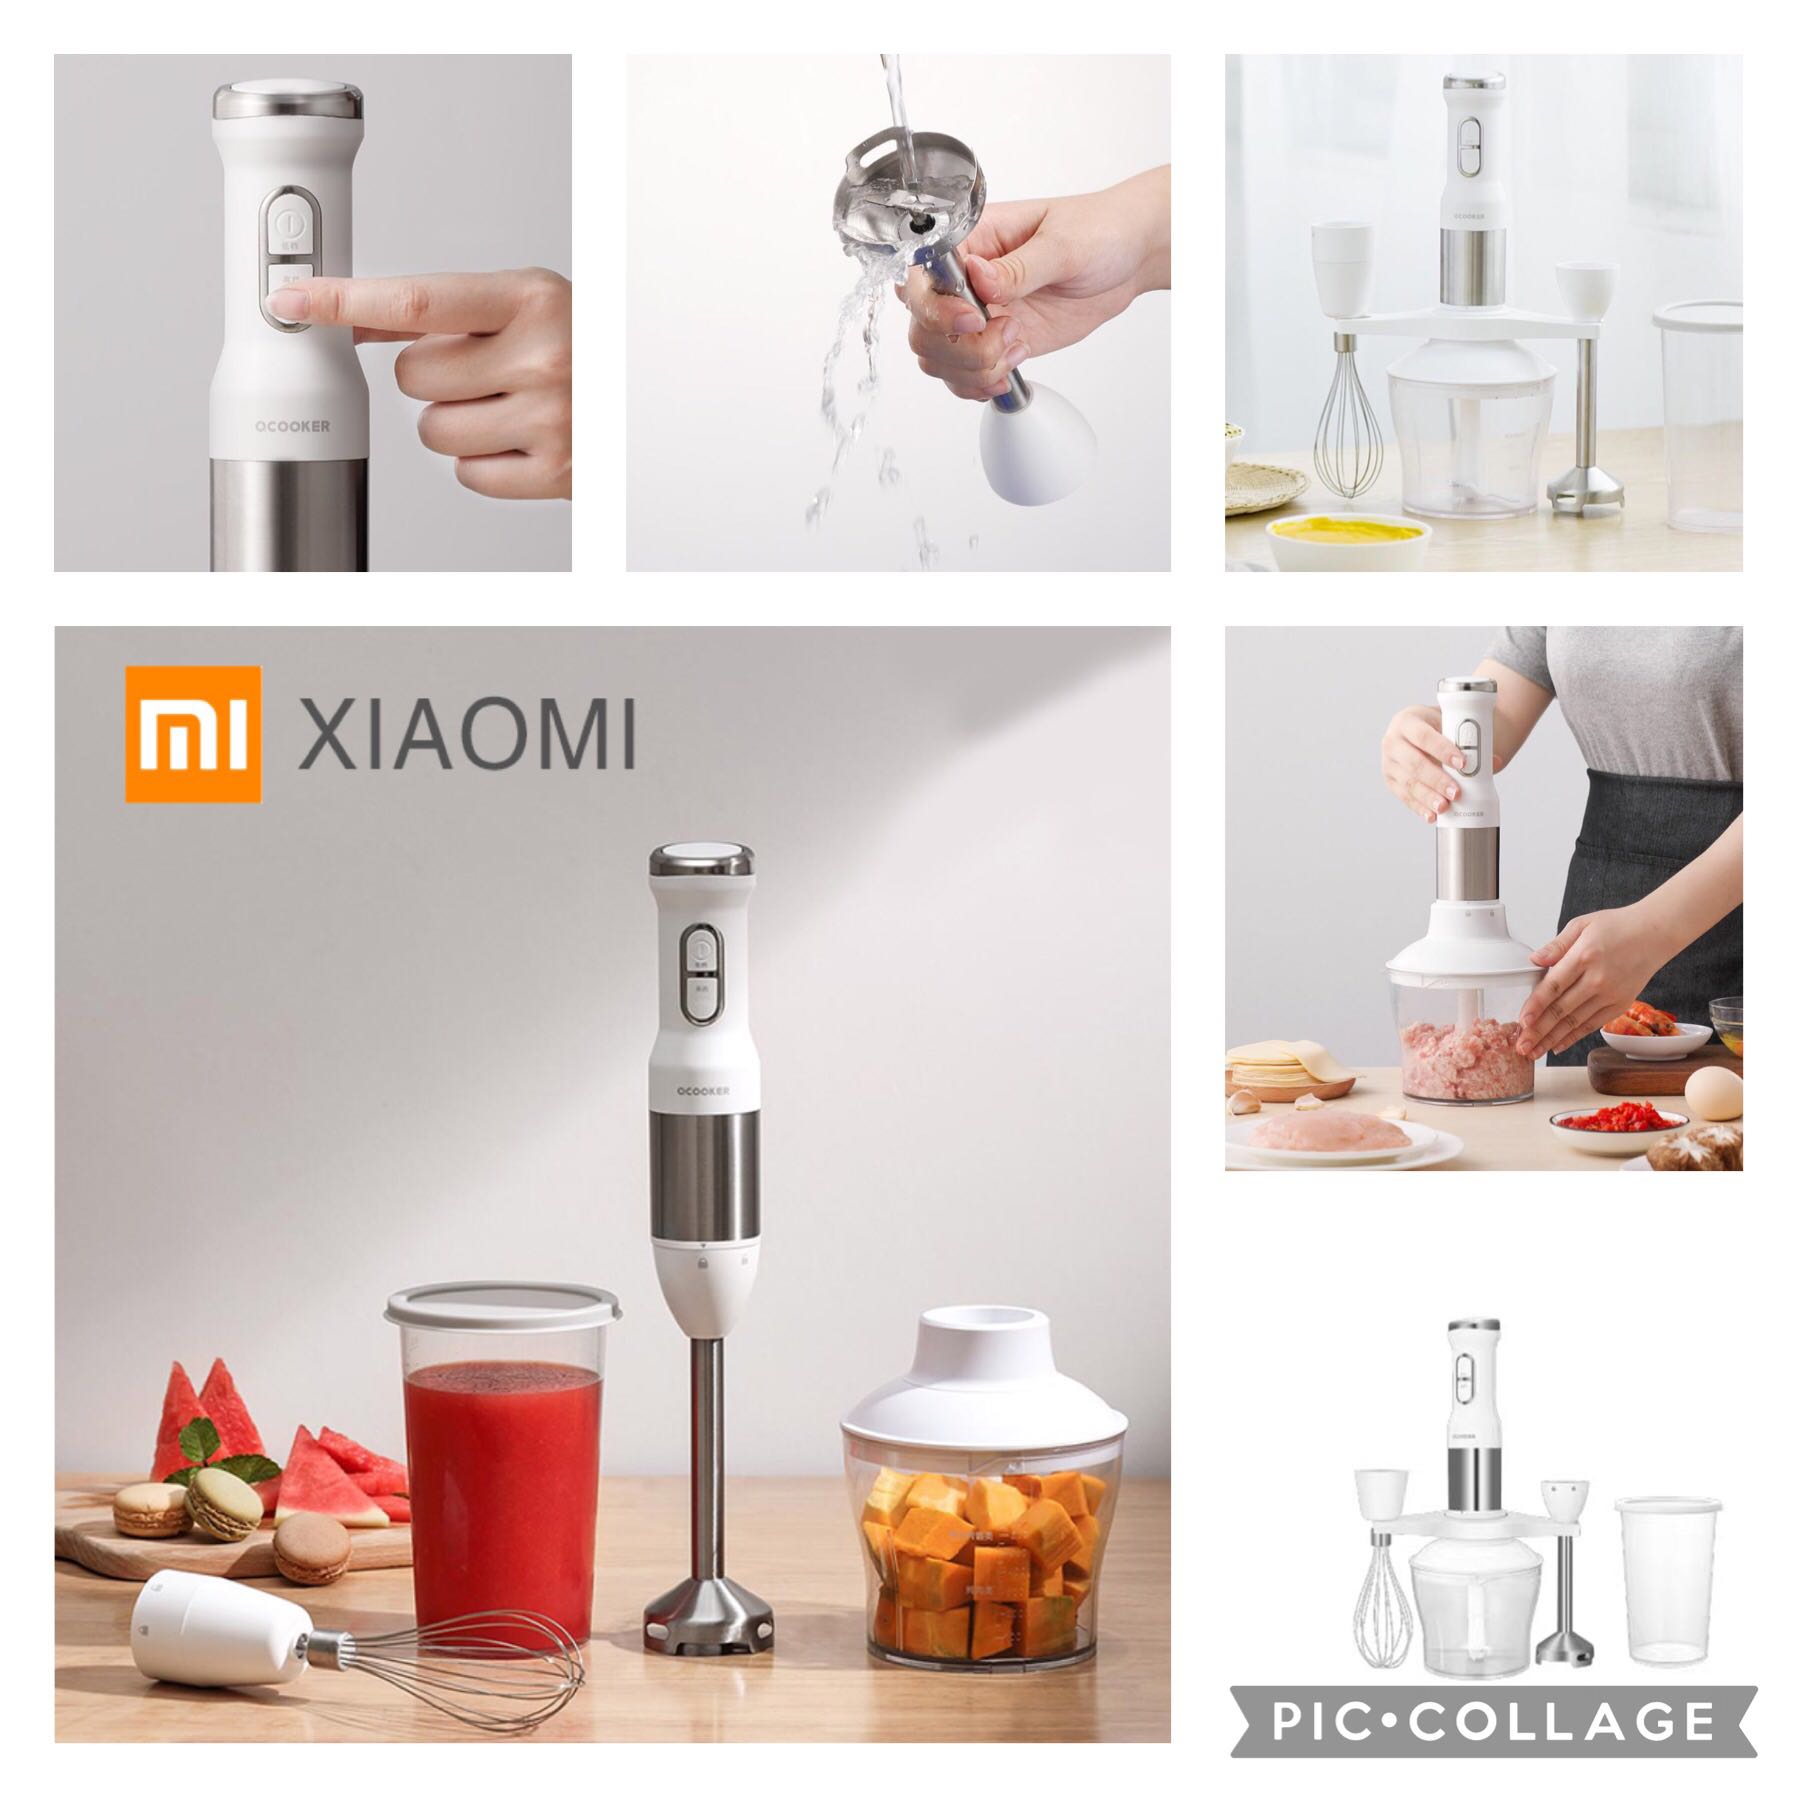 Xiaomi ocooker multi-purpose cooking robot